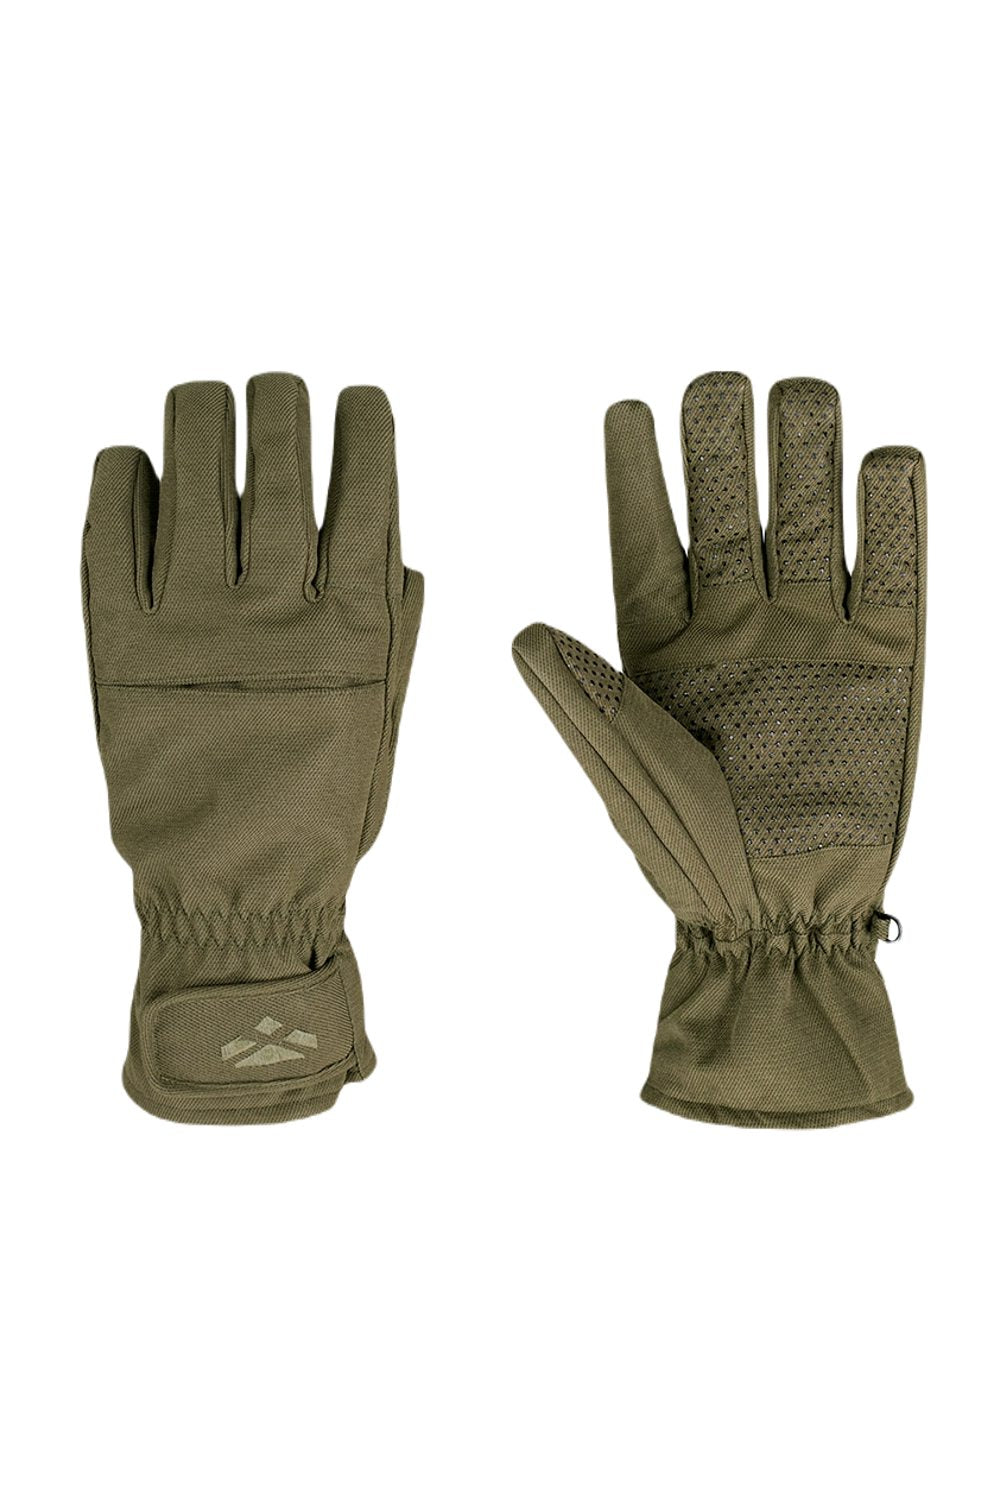 Hoggs of Fife Kincraig Waterproof Gloves in Olive Green 